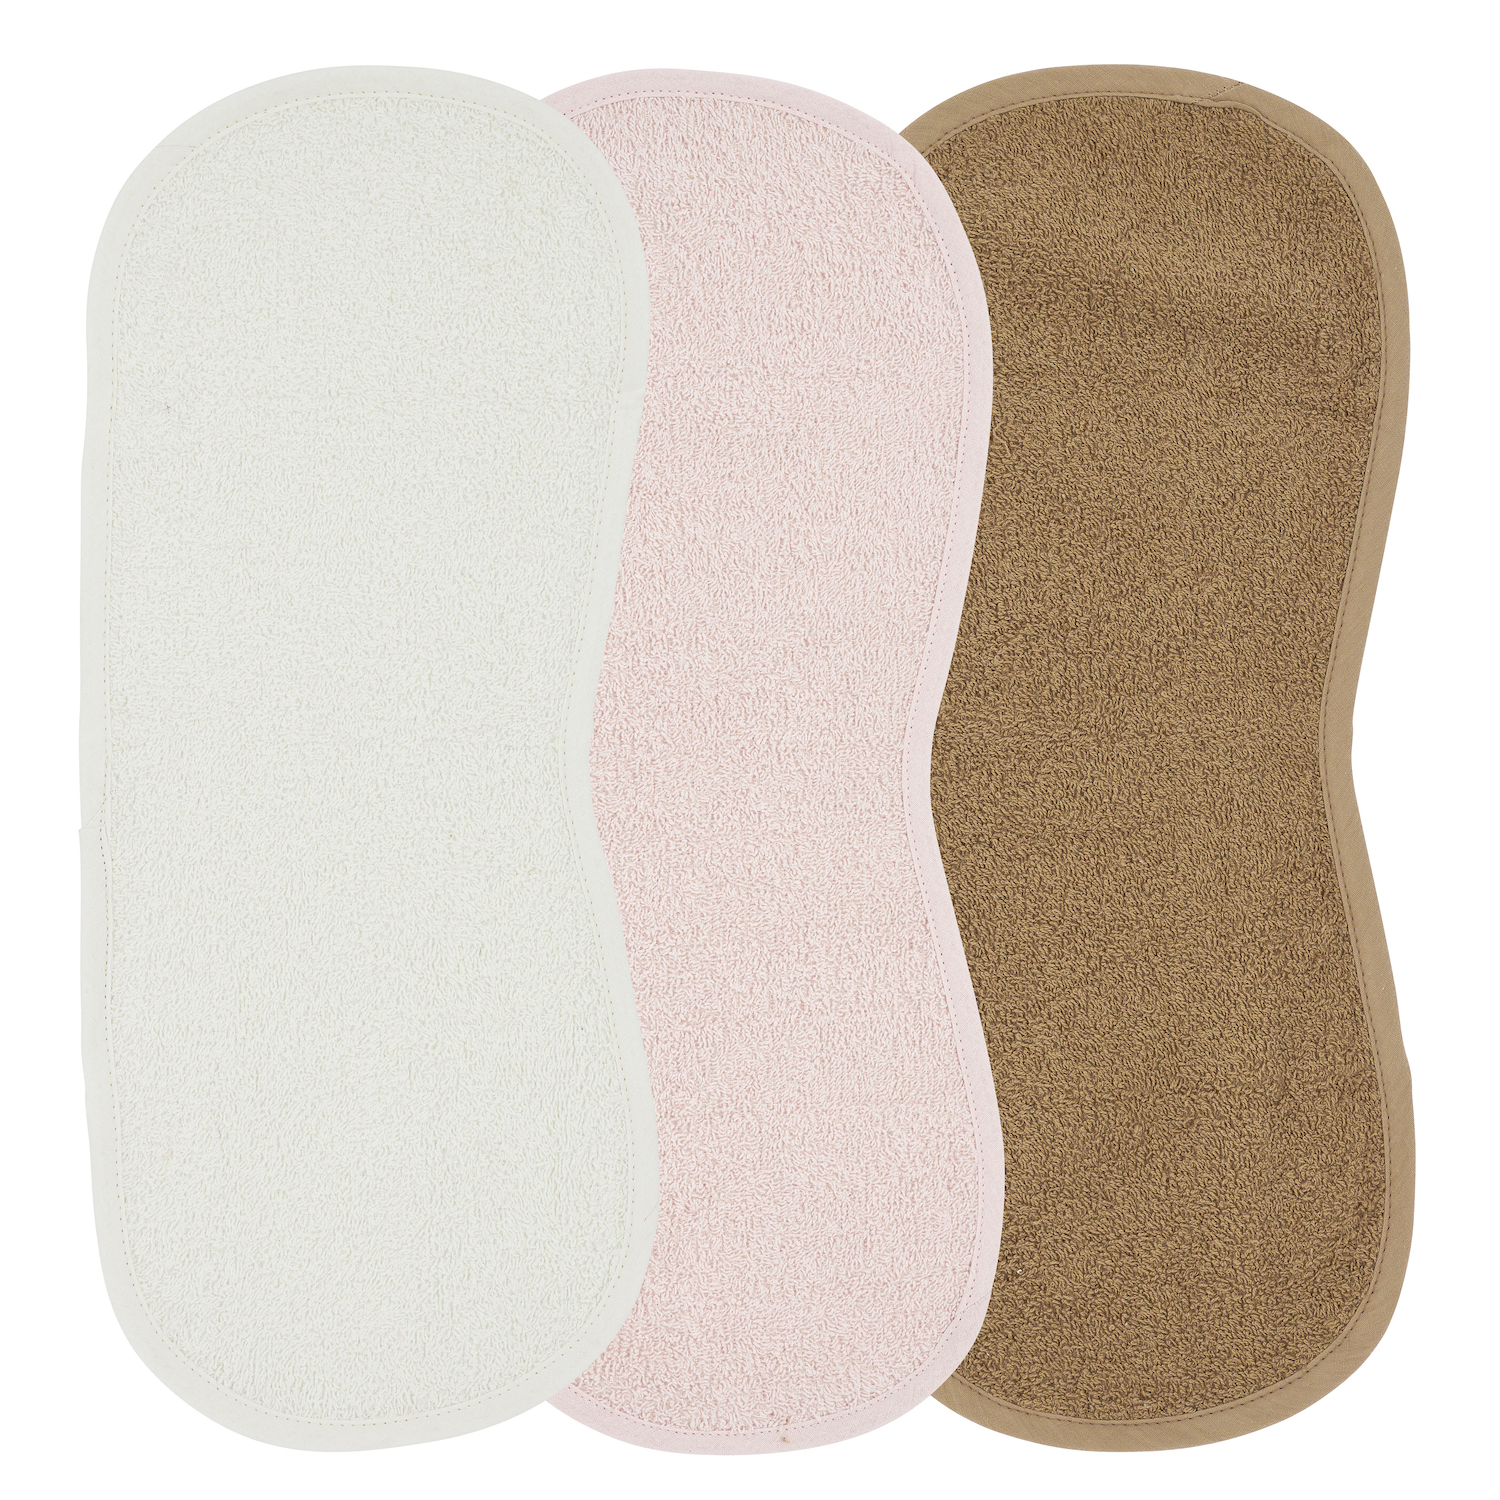 Spuugdoek 3-pack badstof Uni - offwhite/soft pink/toffee - 53x20cm